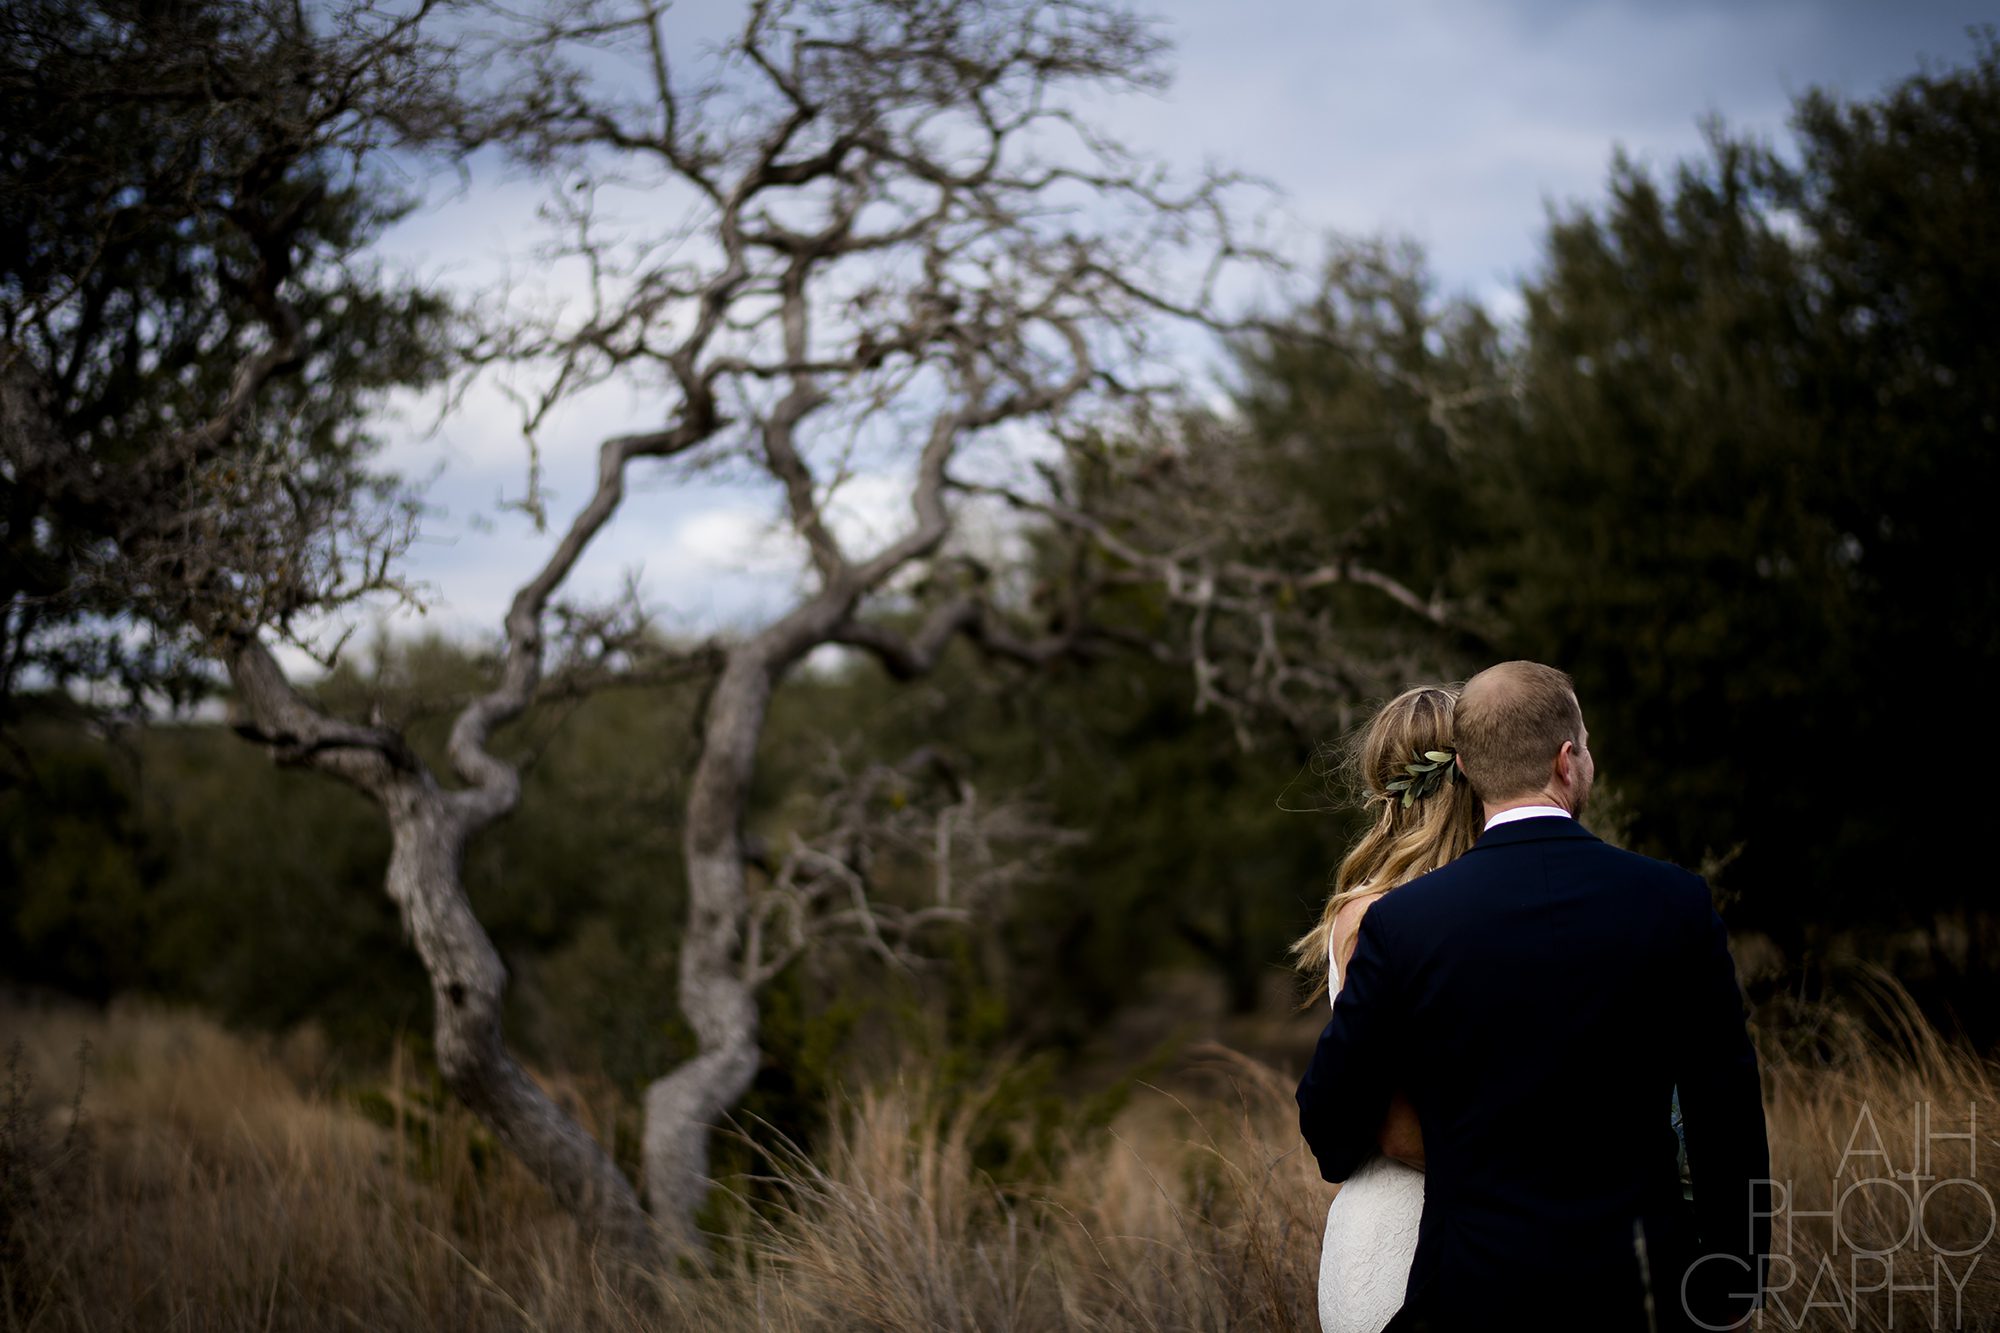 vista west ranch wedding - AJH Photography